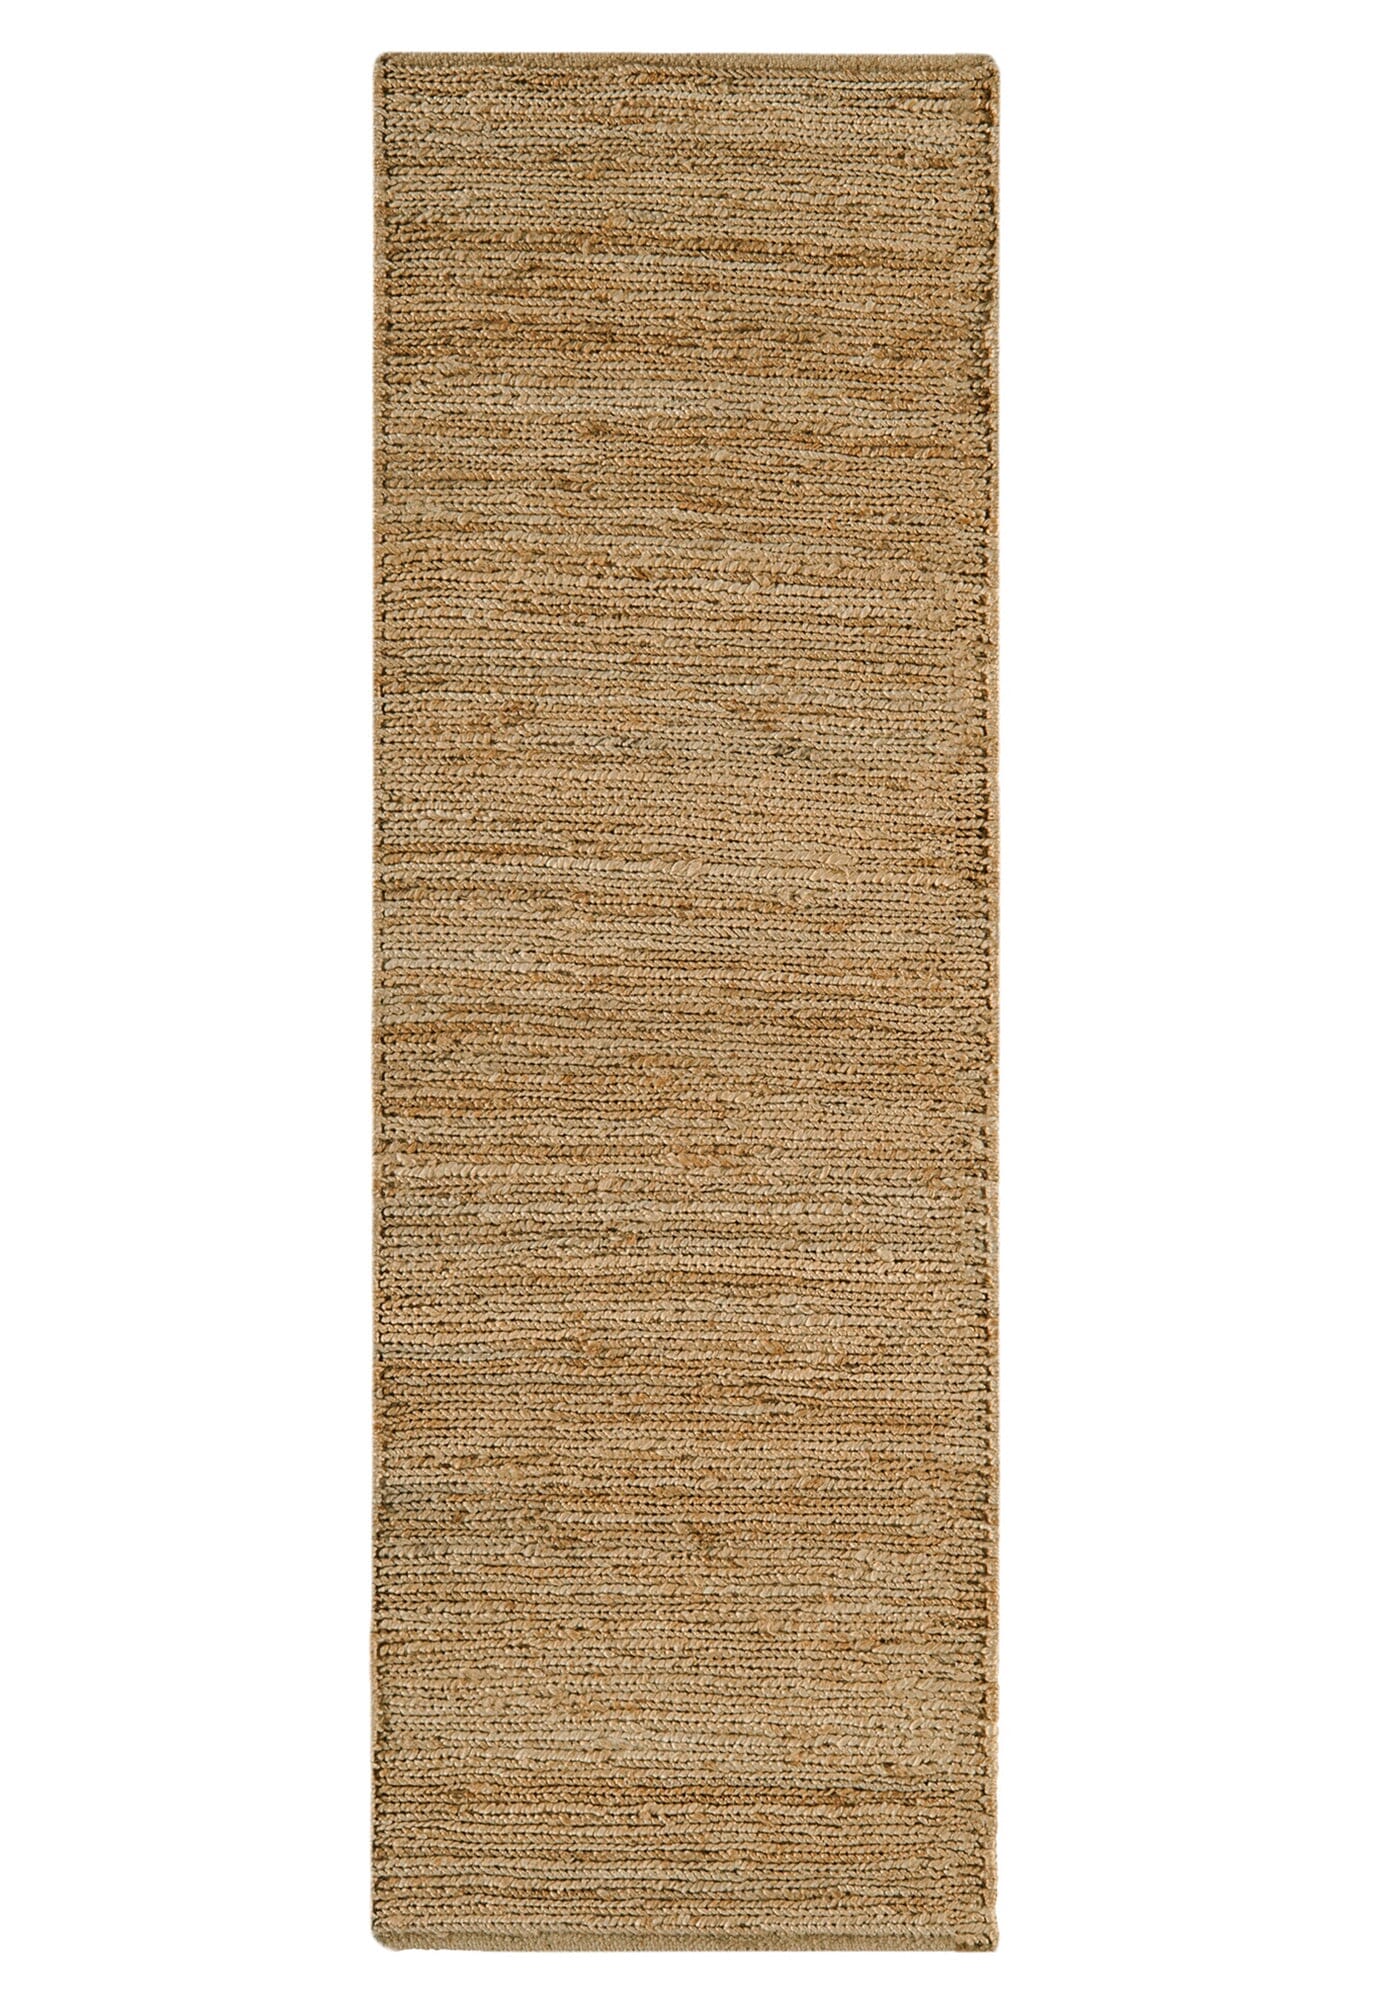  Asiatic Carpets-Asiatic Carpets Soumak Hand Woven Rug Natural - 160 x 230cm-Beige, Natural 397 